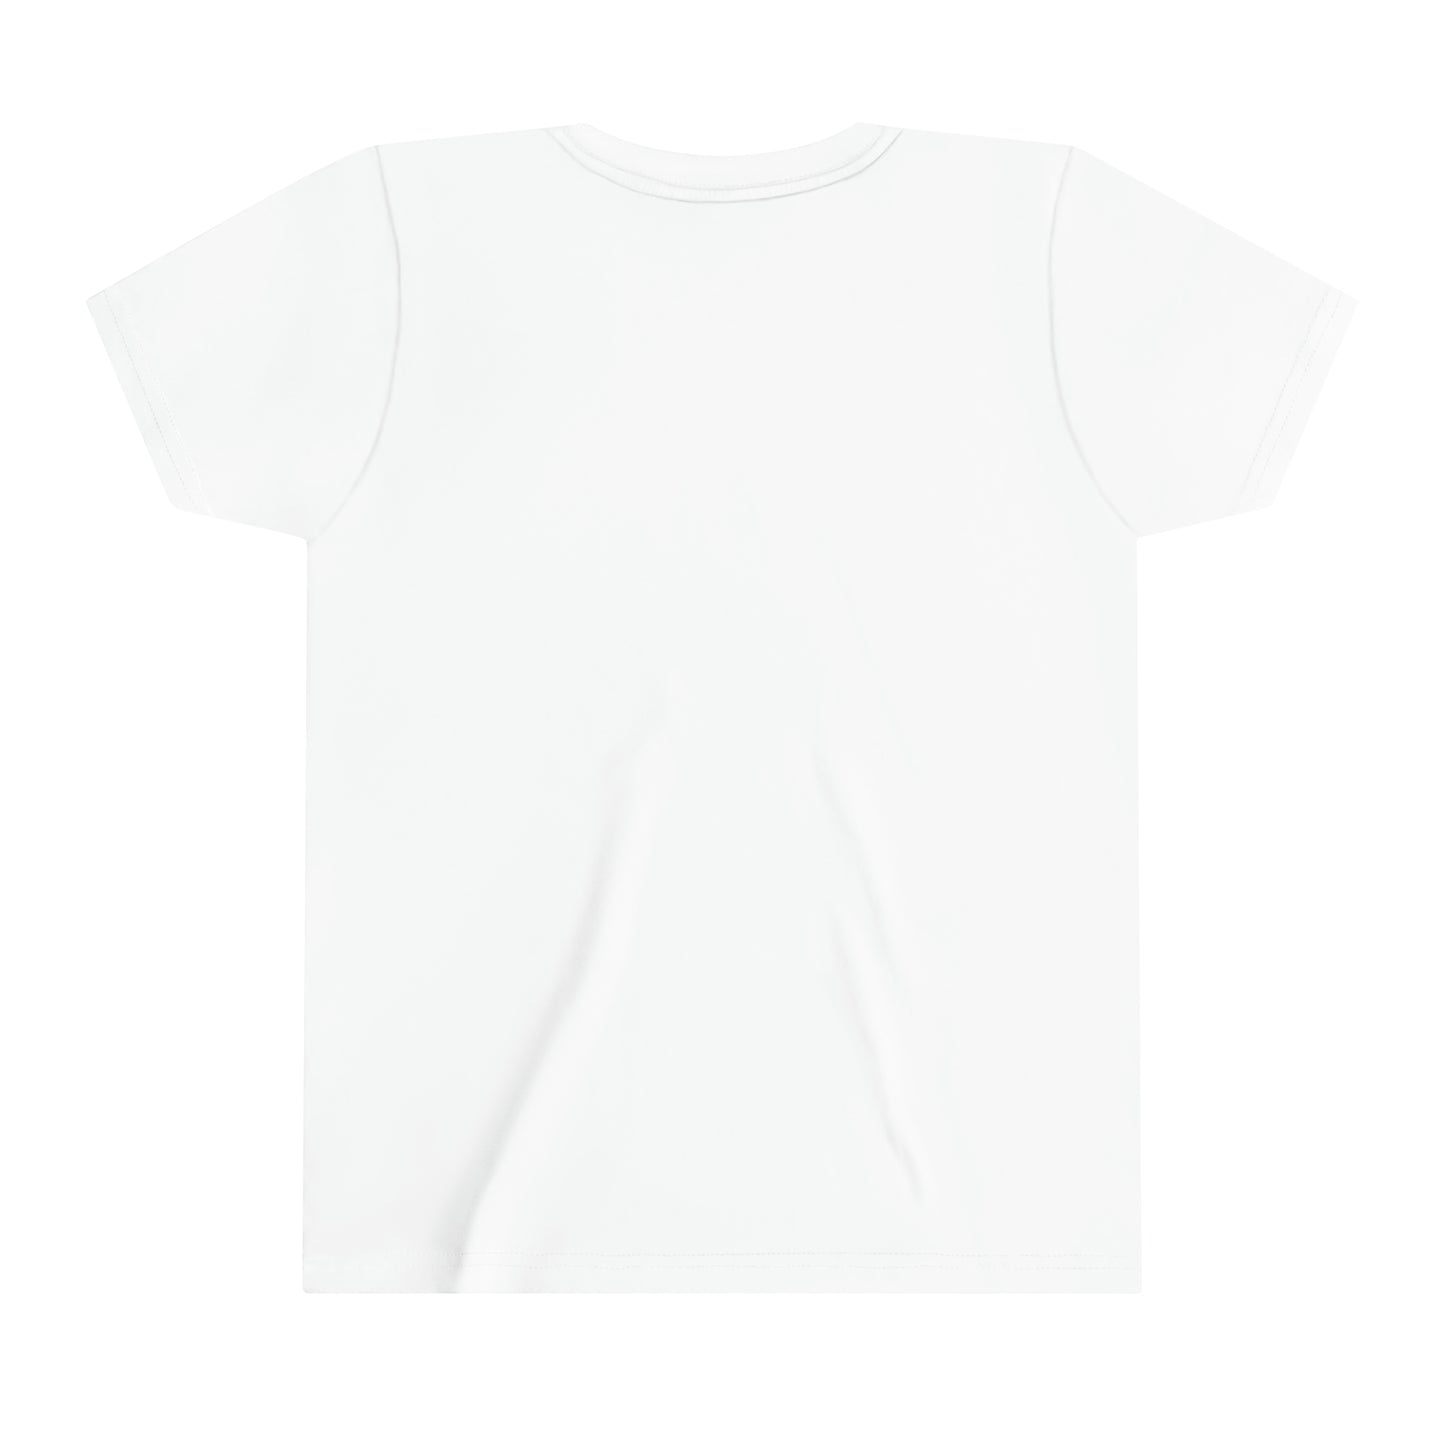 Xcaret Pineda Youth T-Shirt